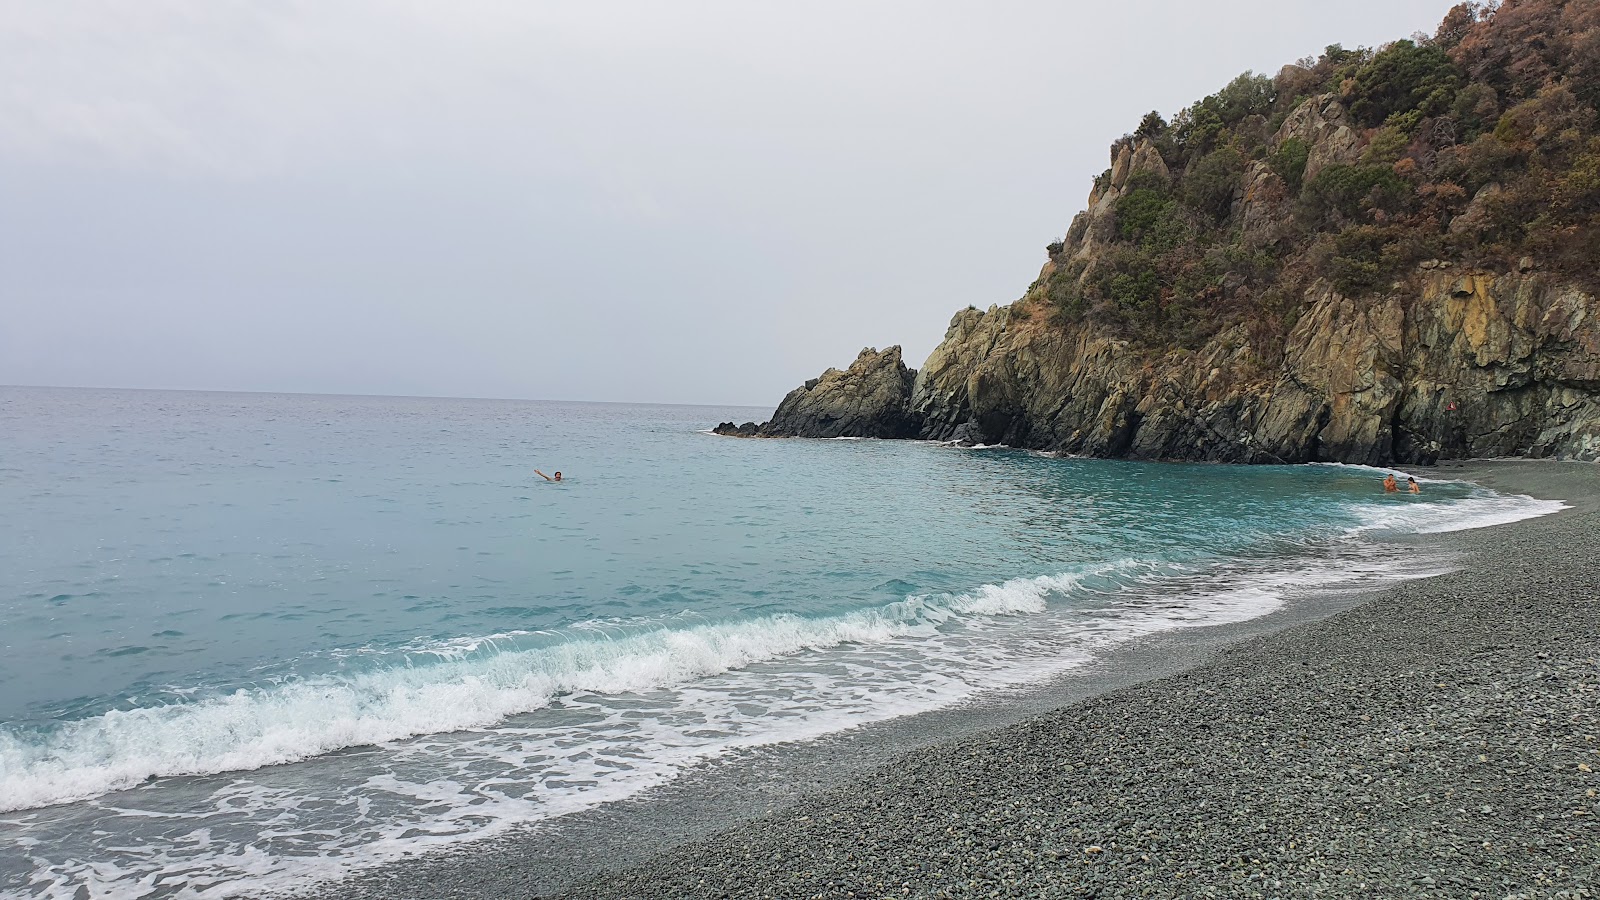 Foto av Spiaggia Arenon med grå fin sten yta